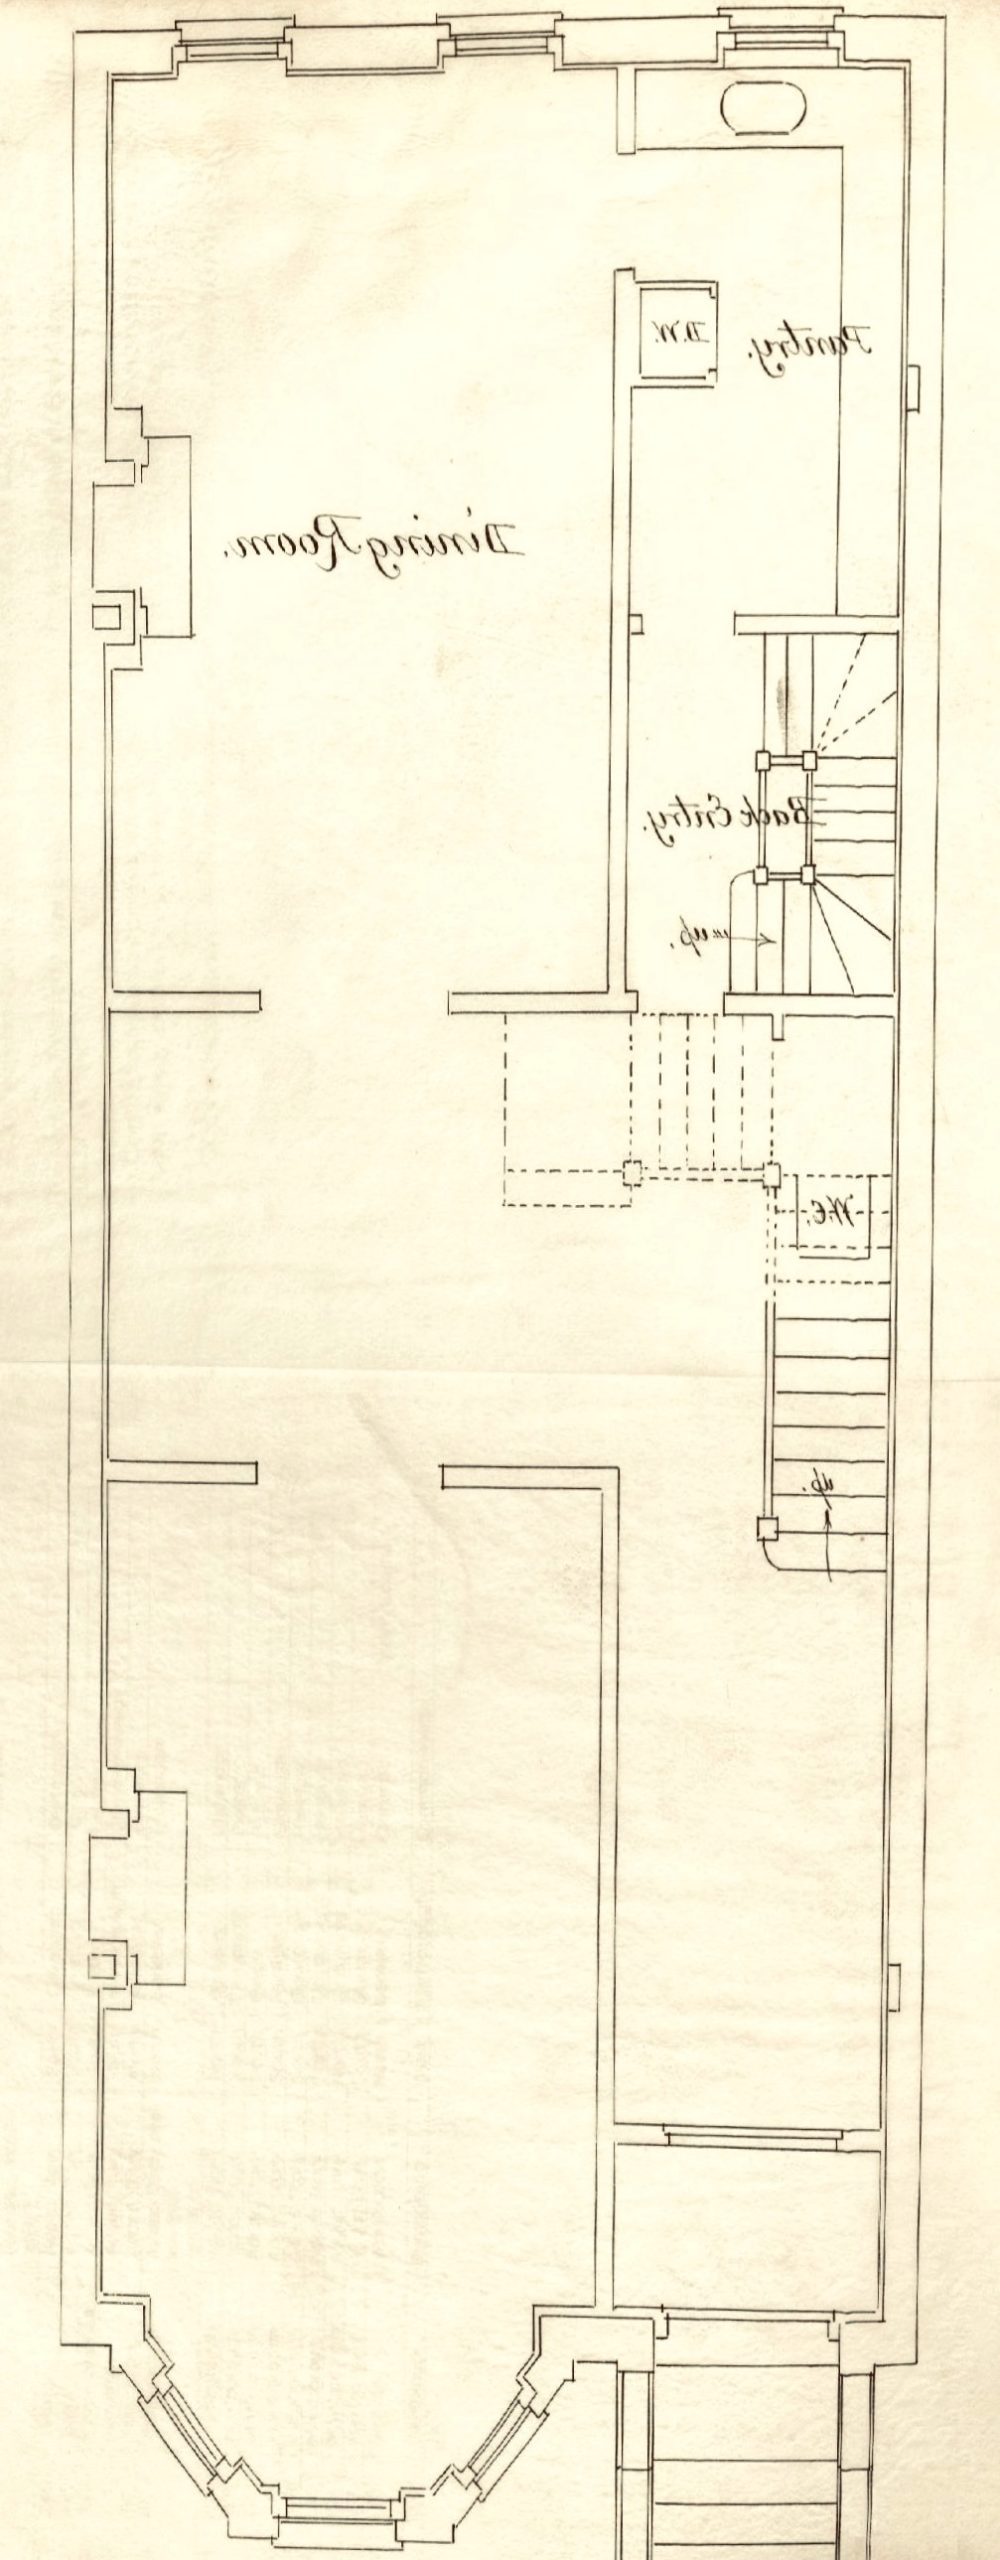 Kelley architect - marl-230-first-floor-plan-1880 reverse